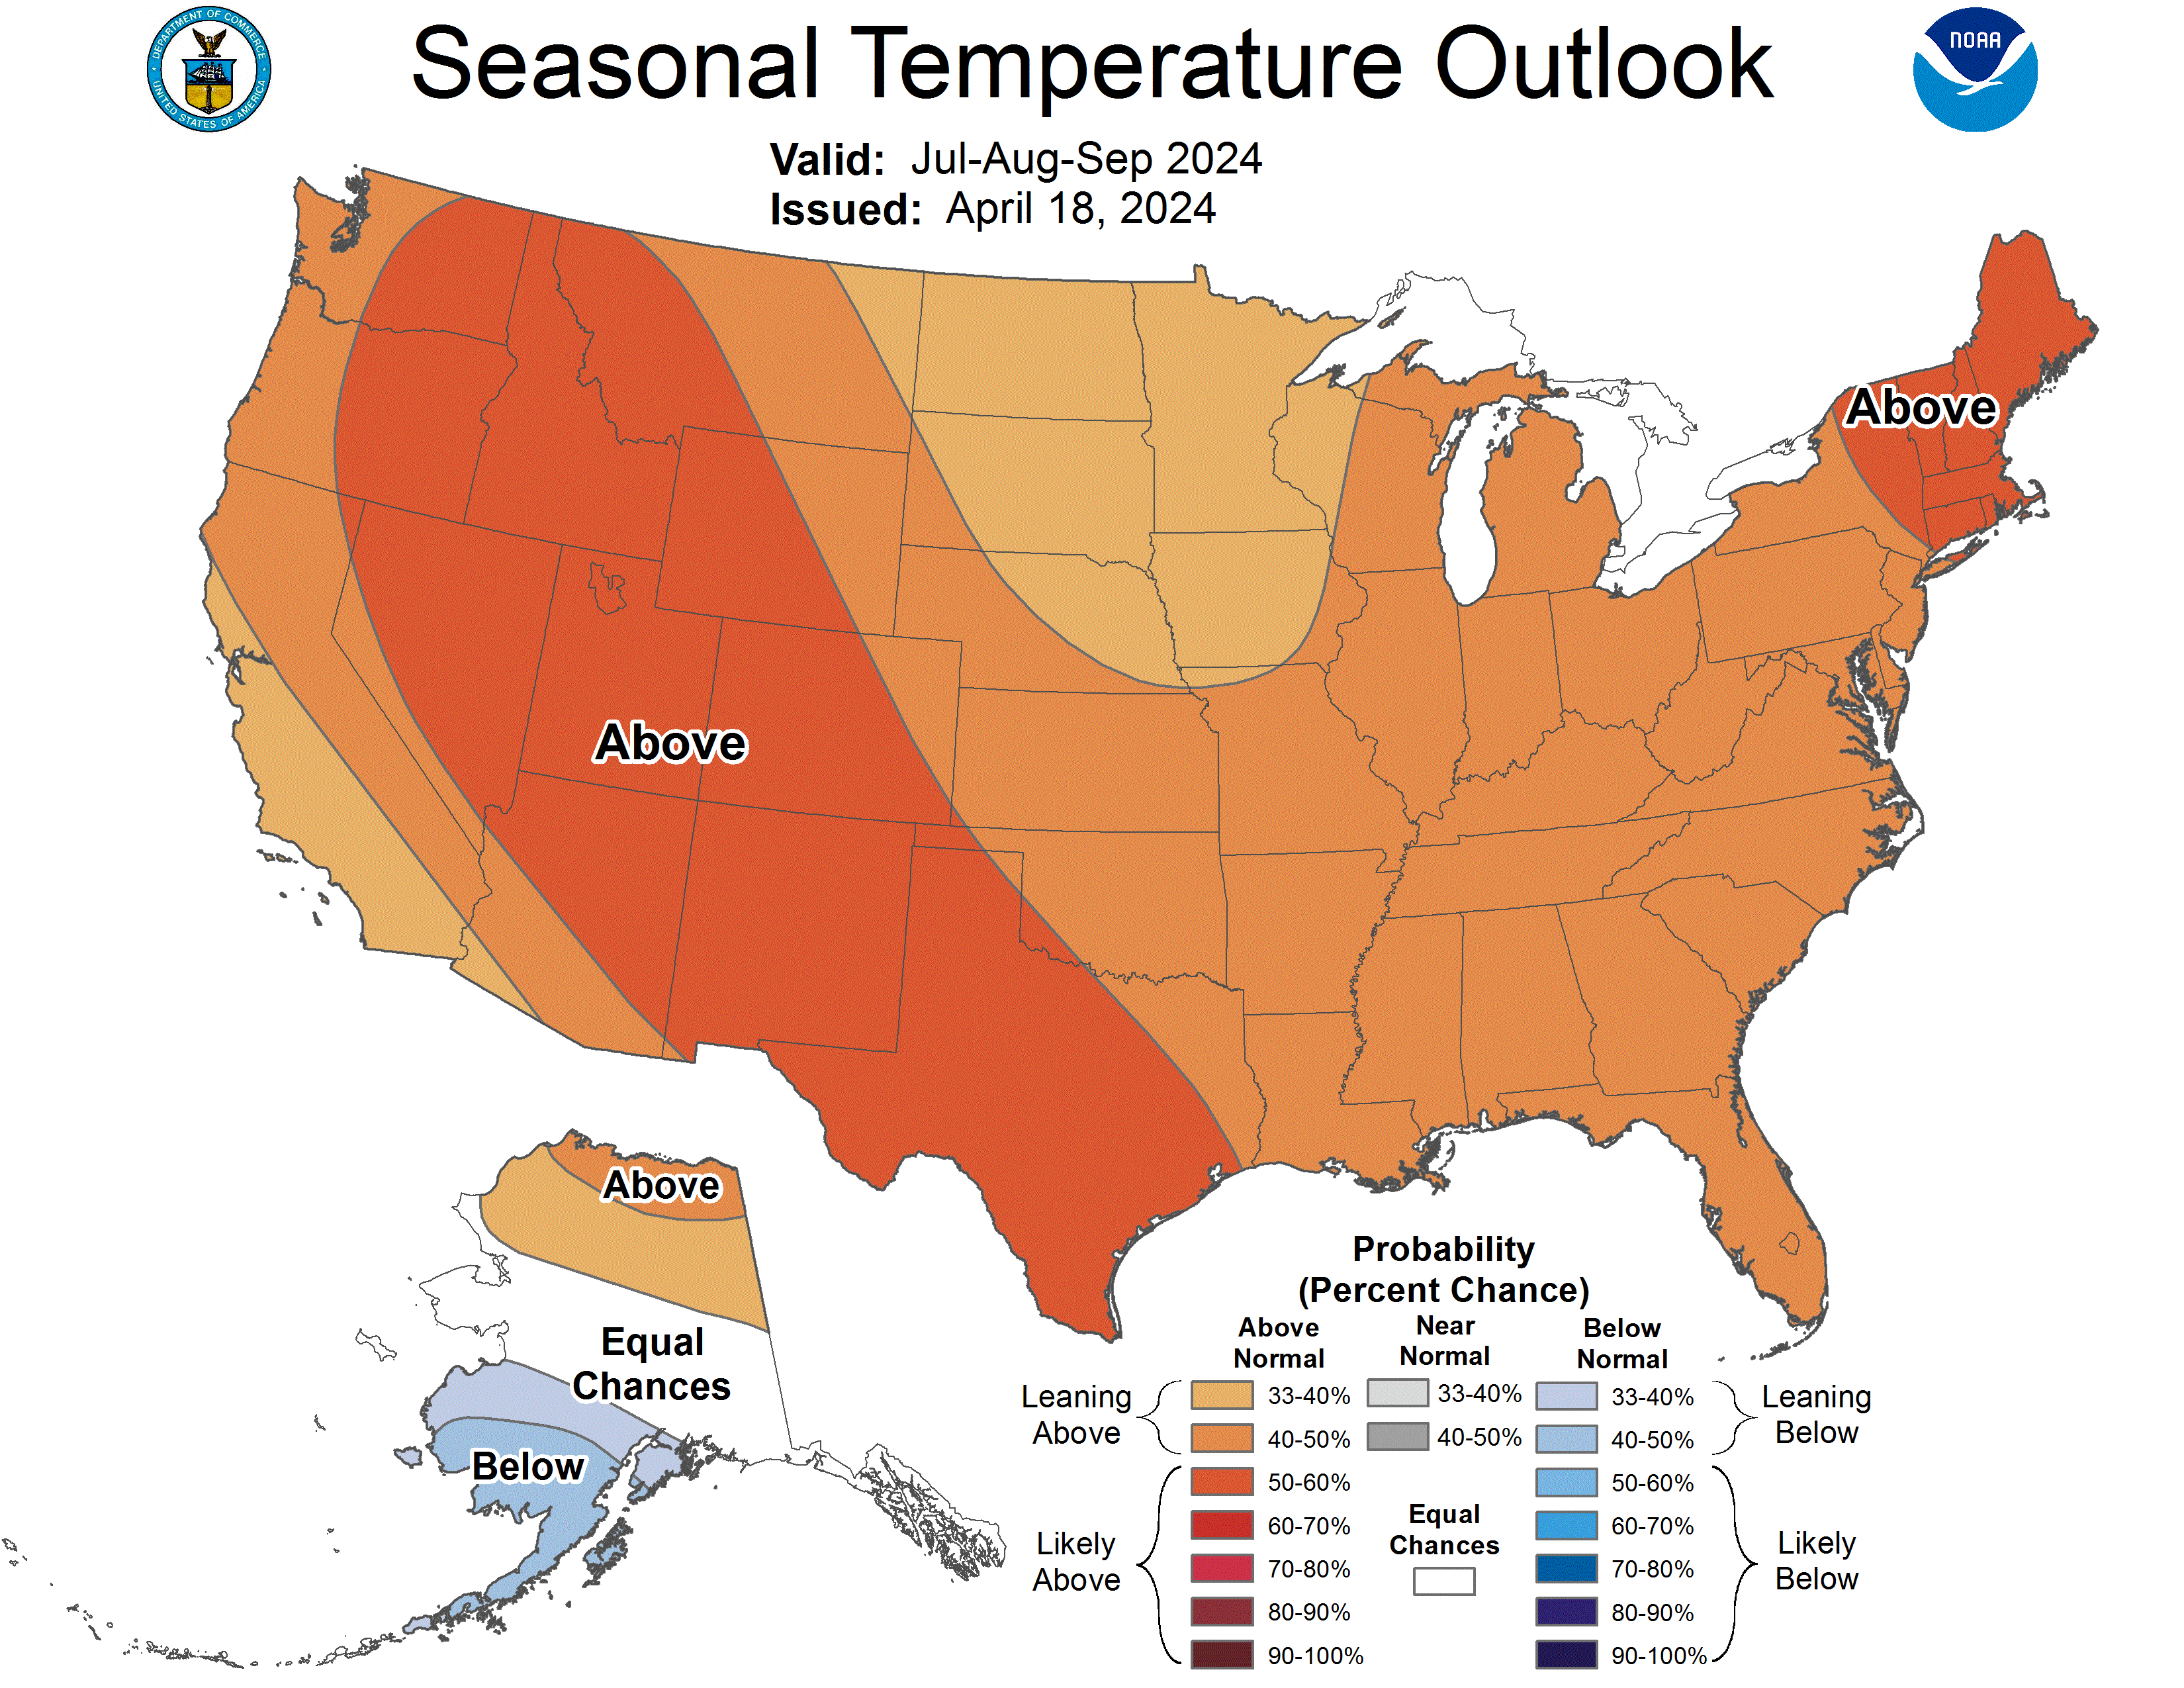 Seasonal Temperature Outlook 2.5 Lead